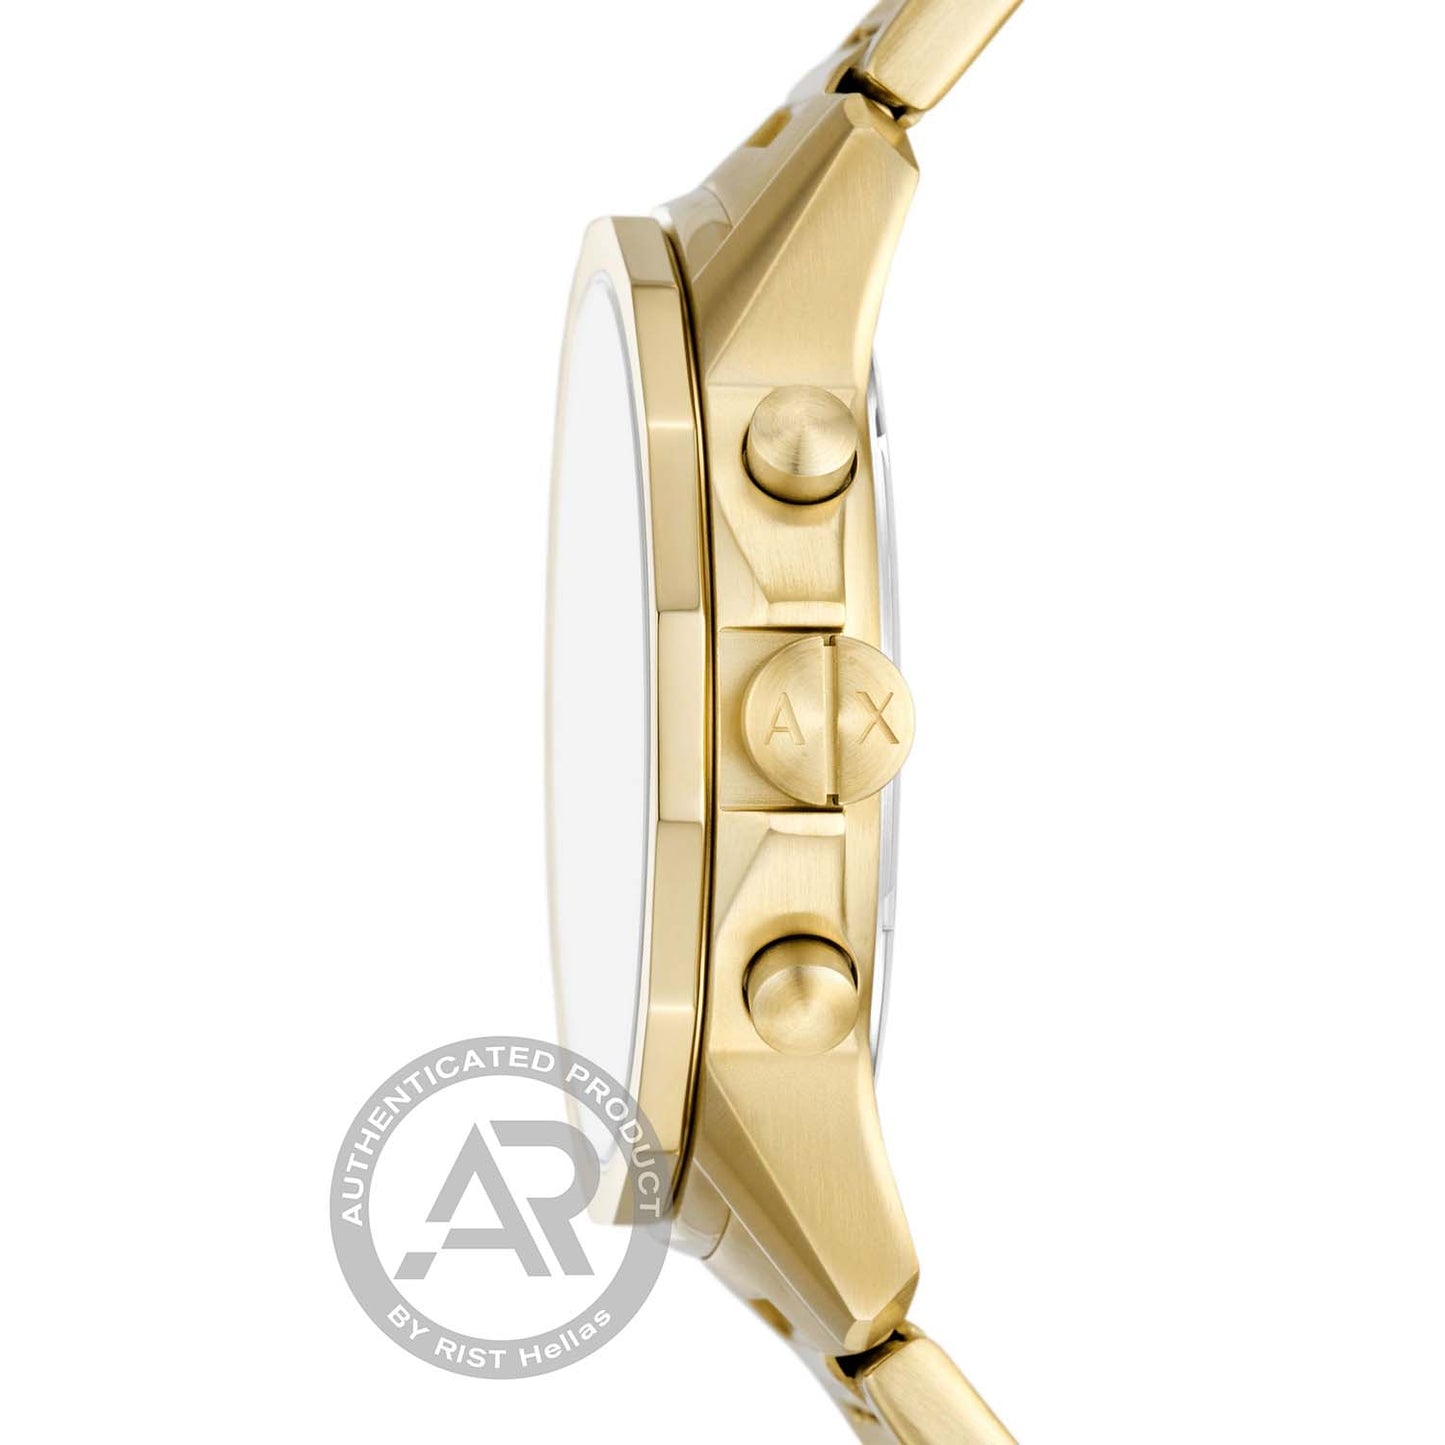 Armani Exchange AX1746 Chronograph Gold Stainless Steel Bracelet